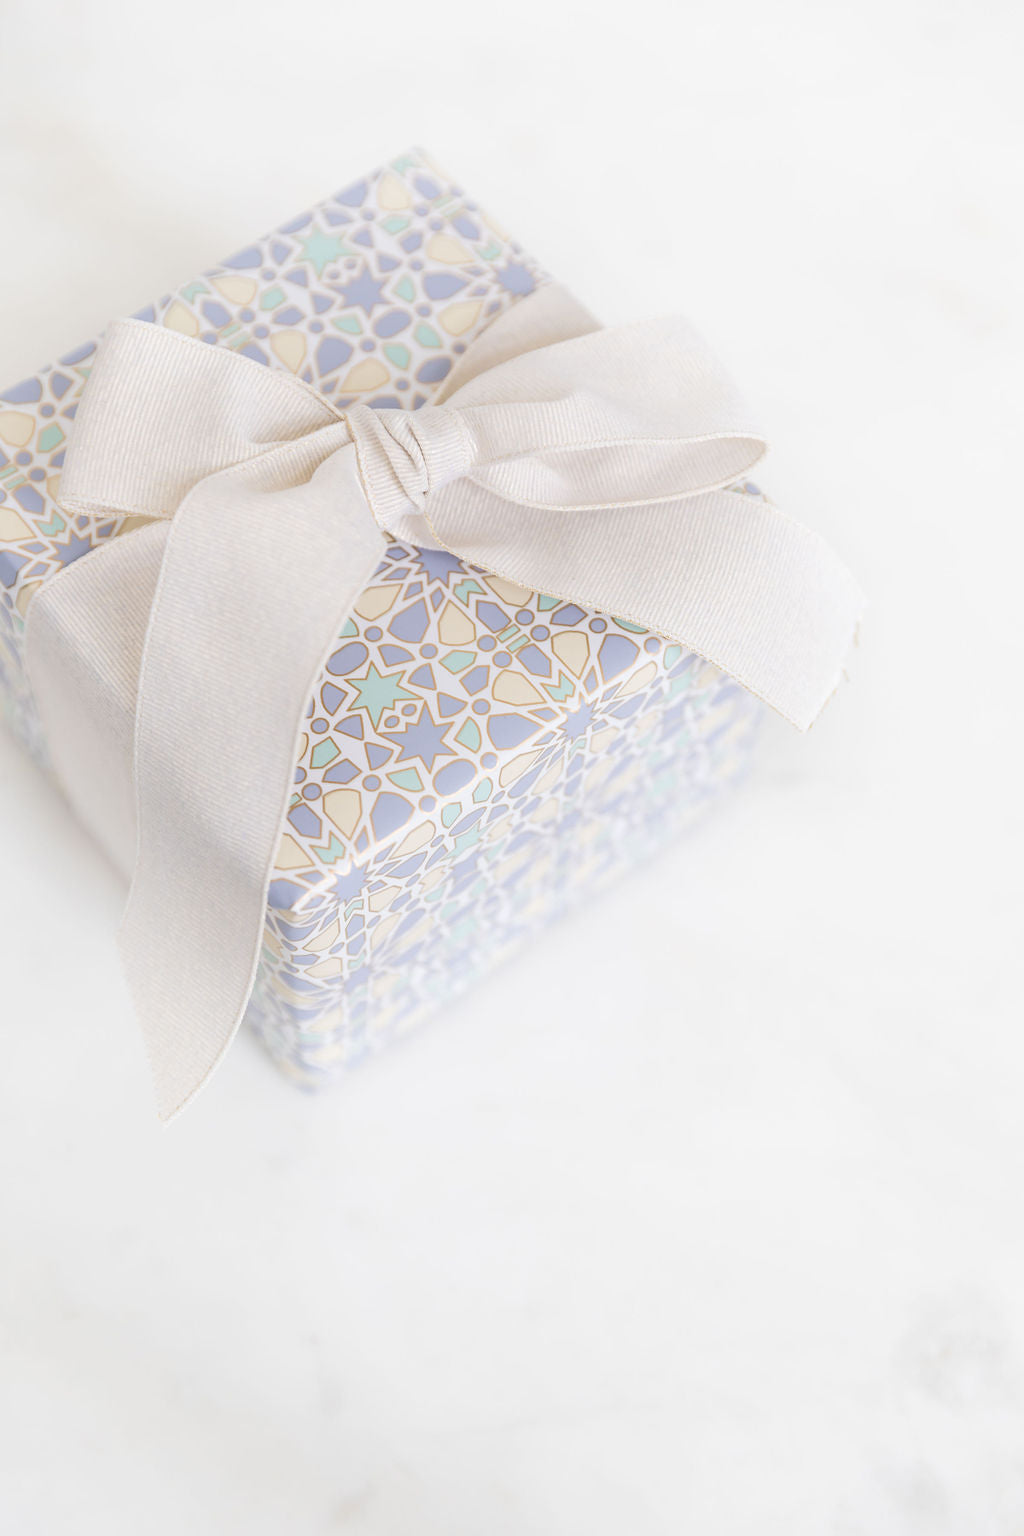 Geometric Gift Wrap